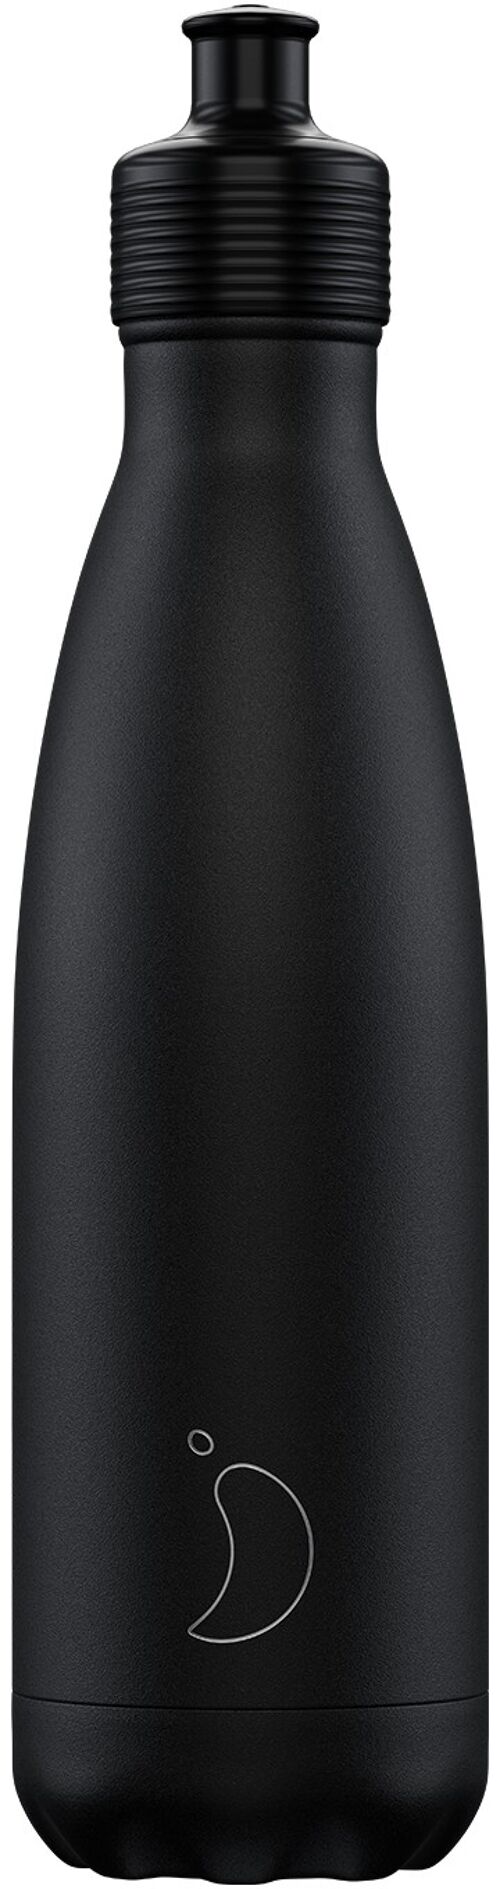 Bottle-500ml-Monochrome Black